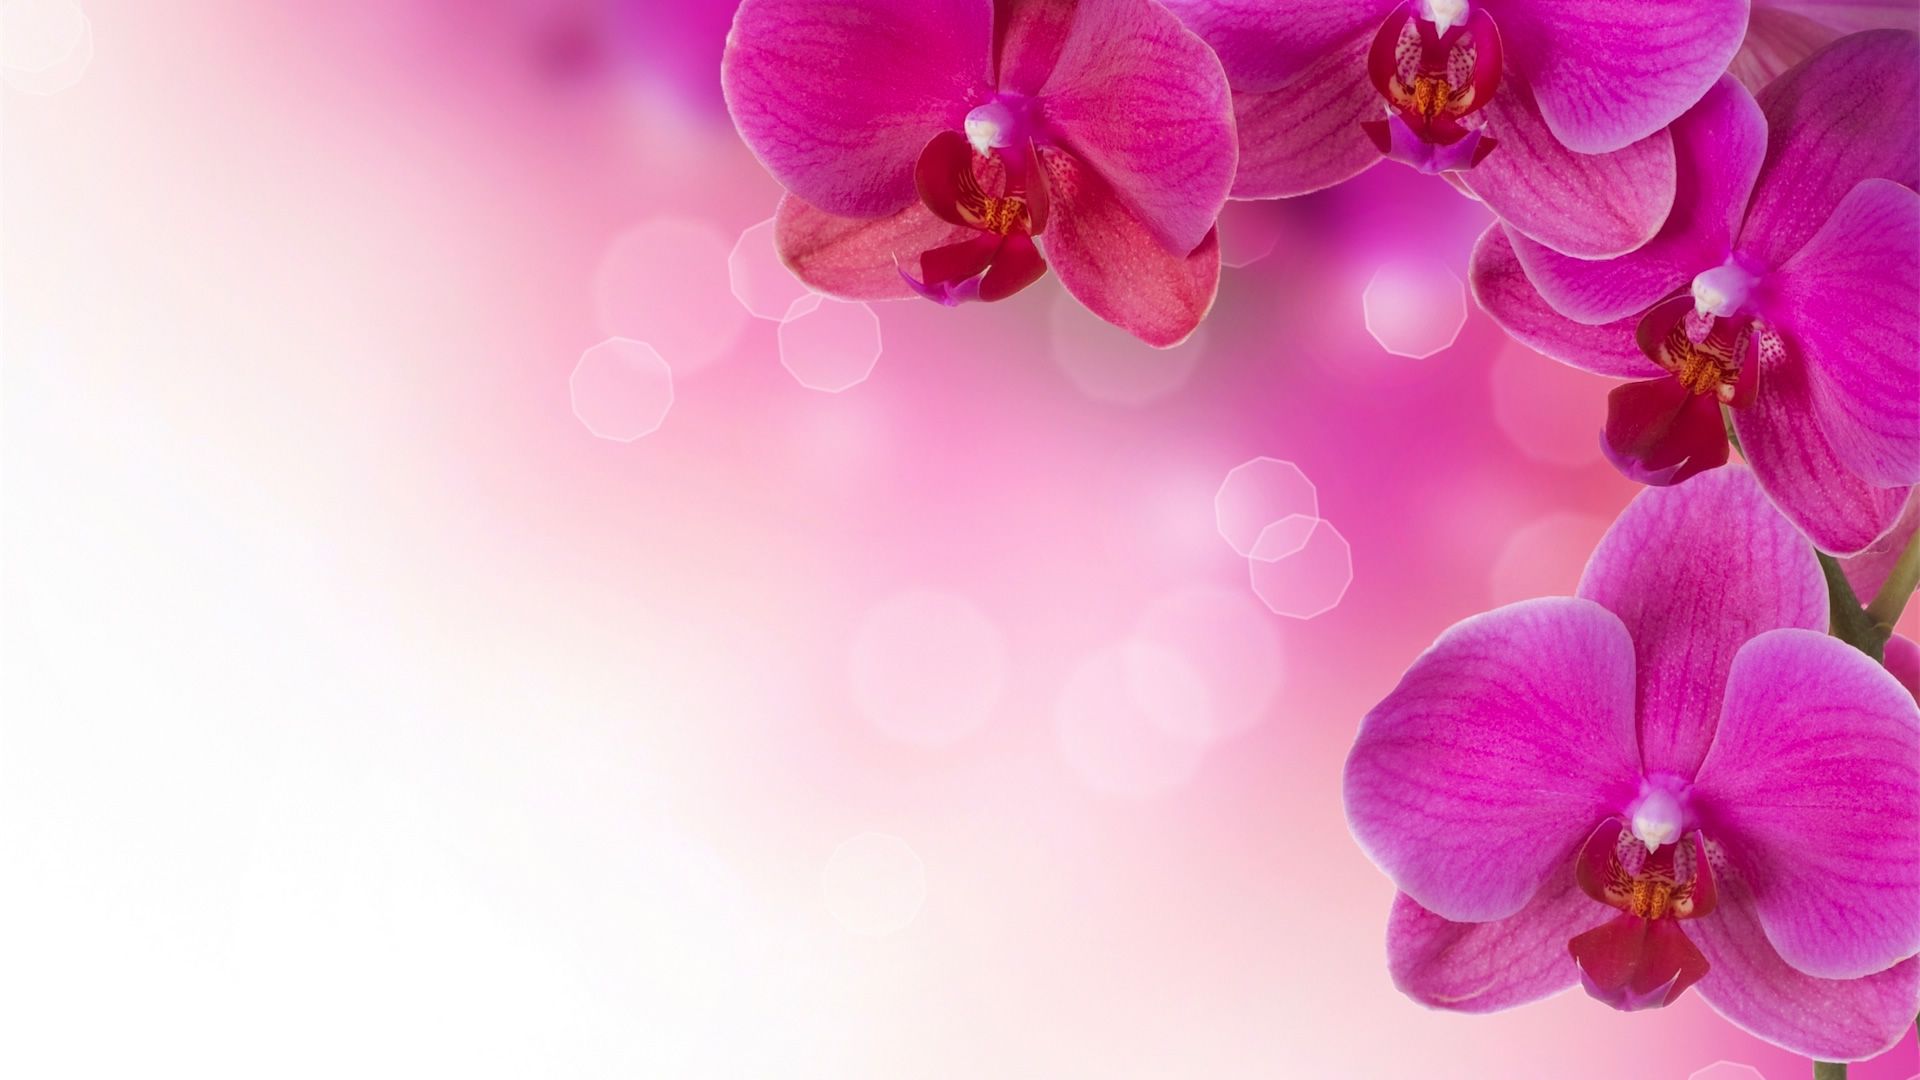 billige blumentapete,blütenblatt,rosa,blume,mottenorchidee,violett